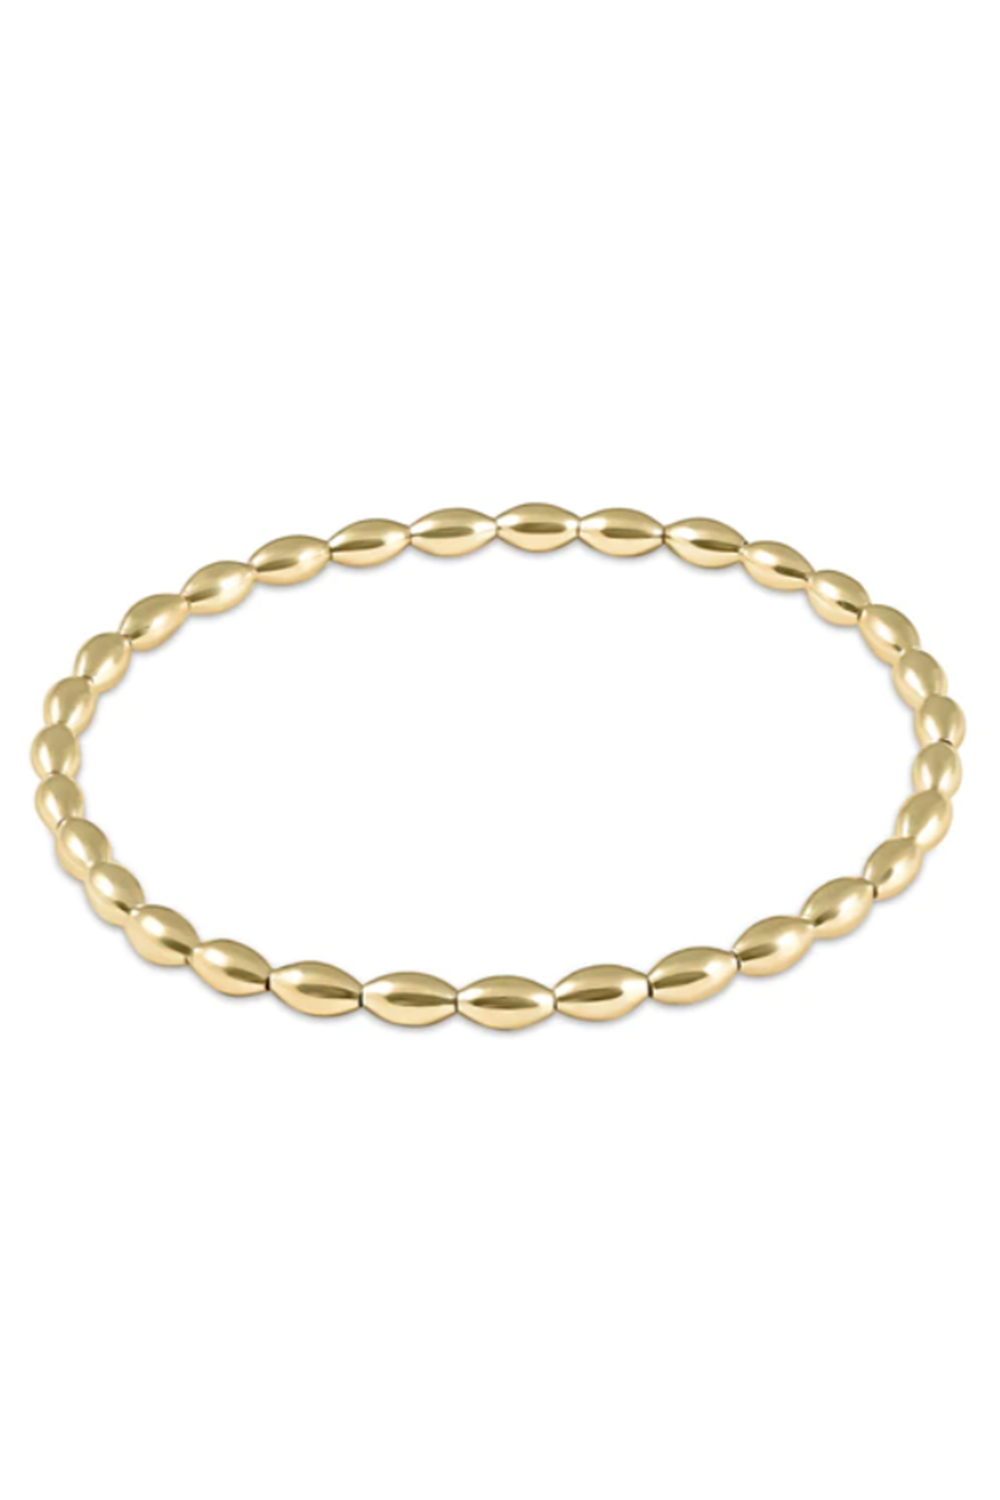 EN Harmony Small Gold Bead Bracelet